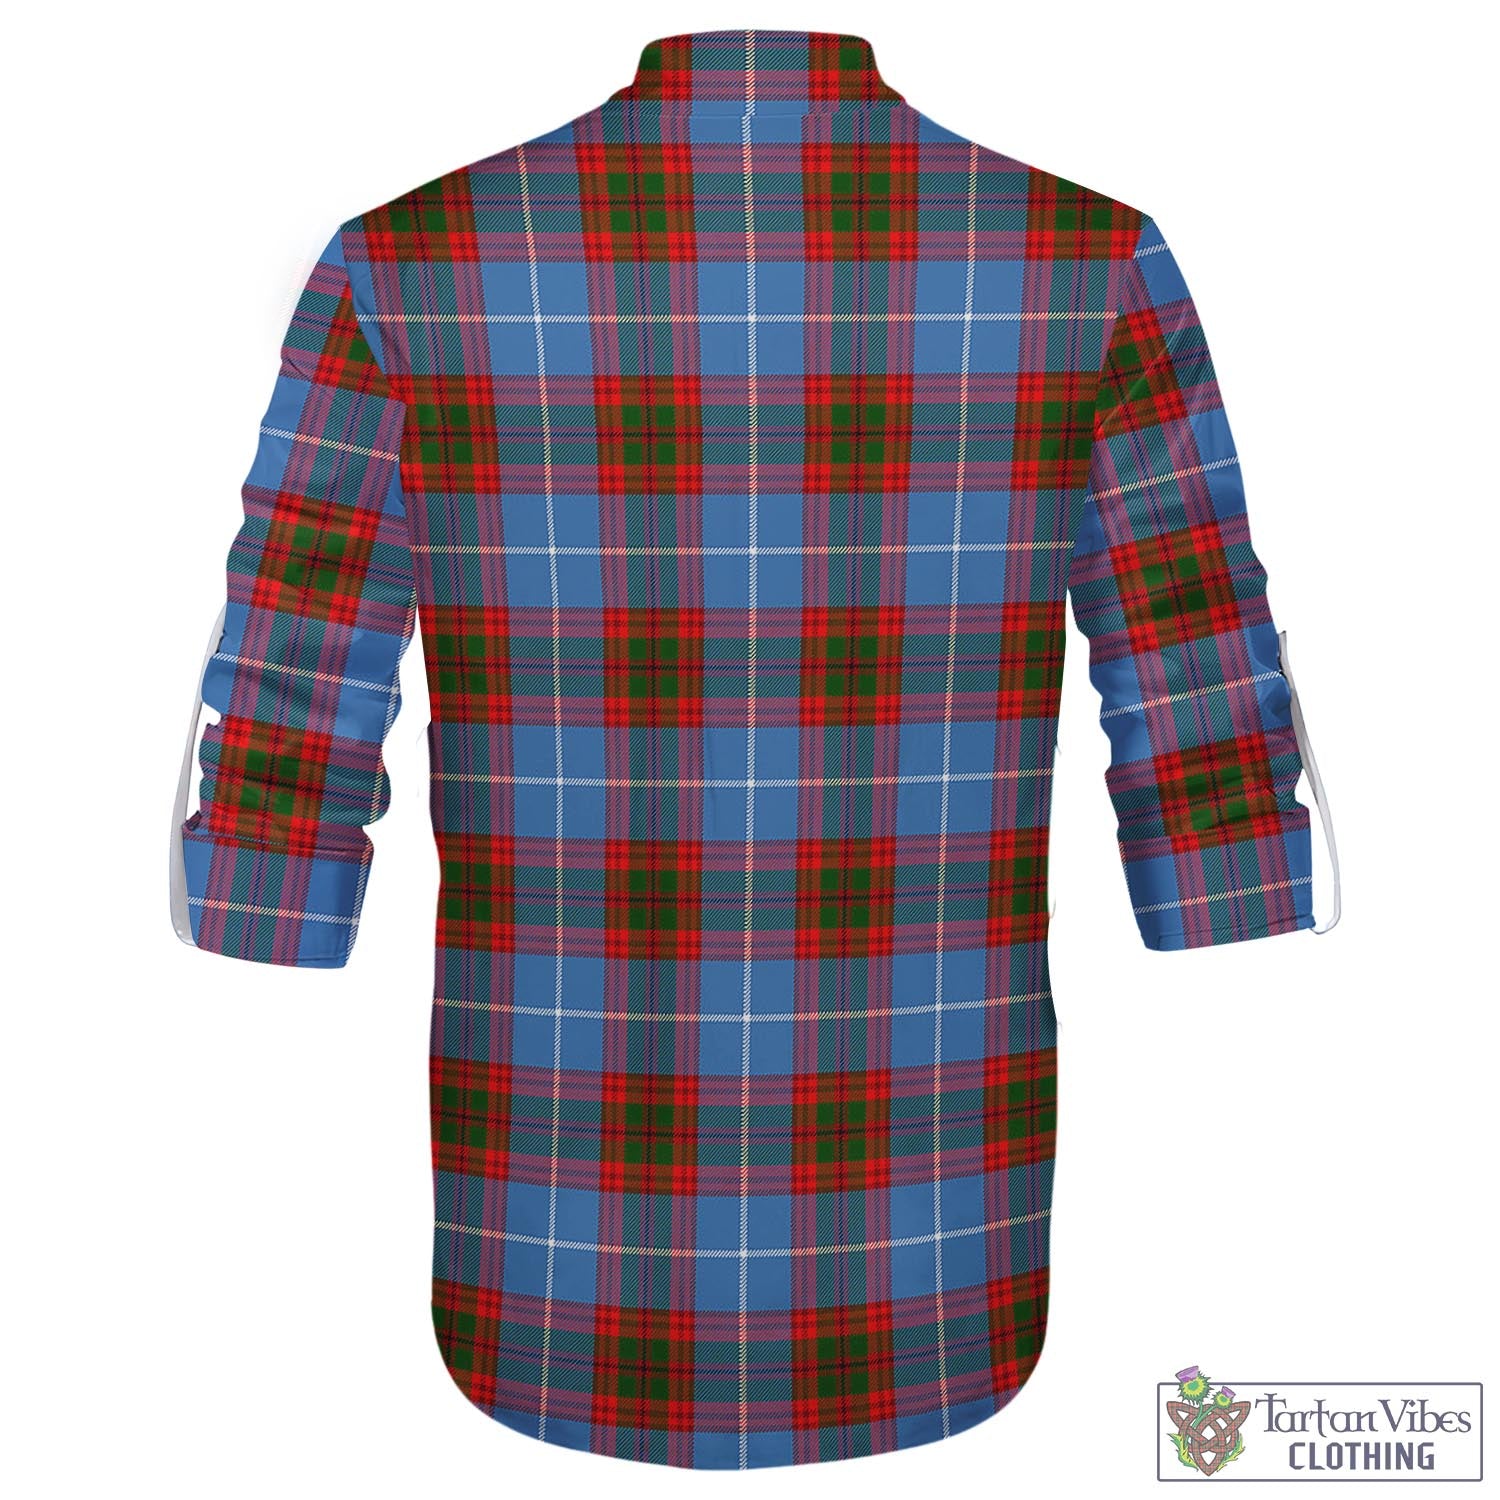 Tartan Vibes Clothing Trotter Tartan Men's Scottish Traditional Jacobite Ghillie Kilt Shirt with Family Crest